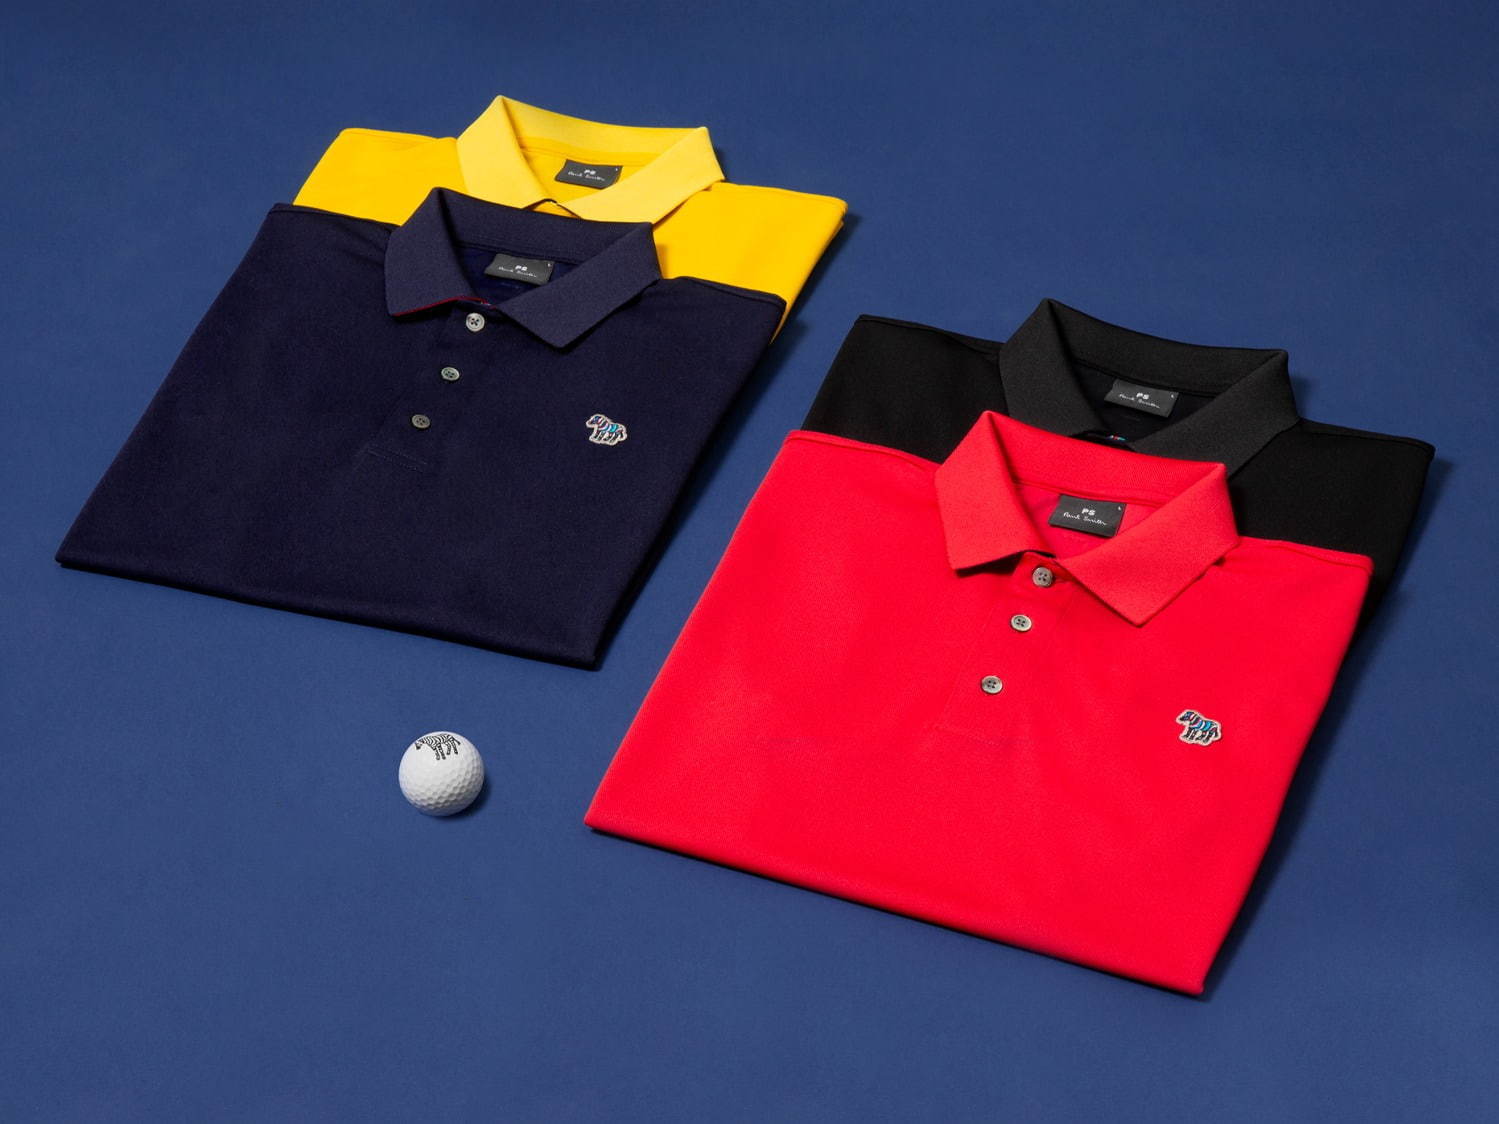 Ps ポール スミスからゴルフウェア登場 機能性にも優れるポロシャツやロゴ入りキャディバッグ ファッションプレス